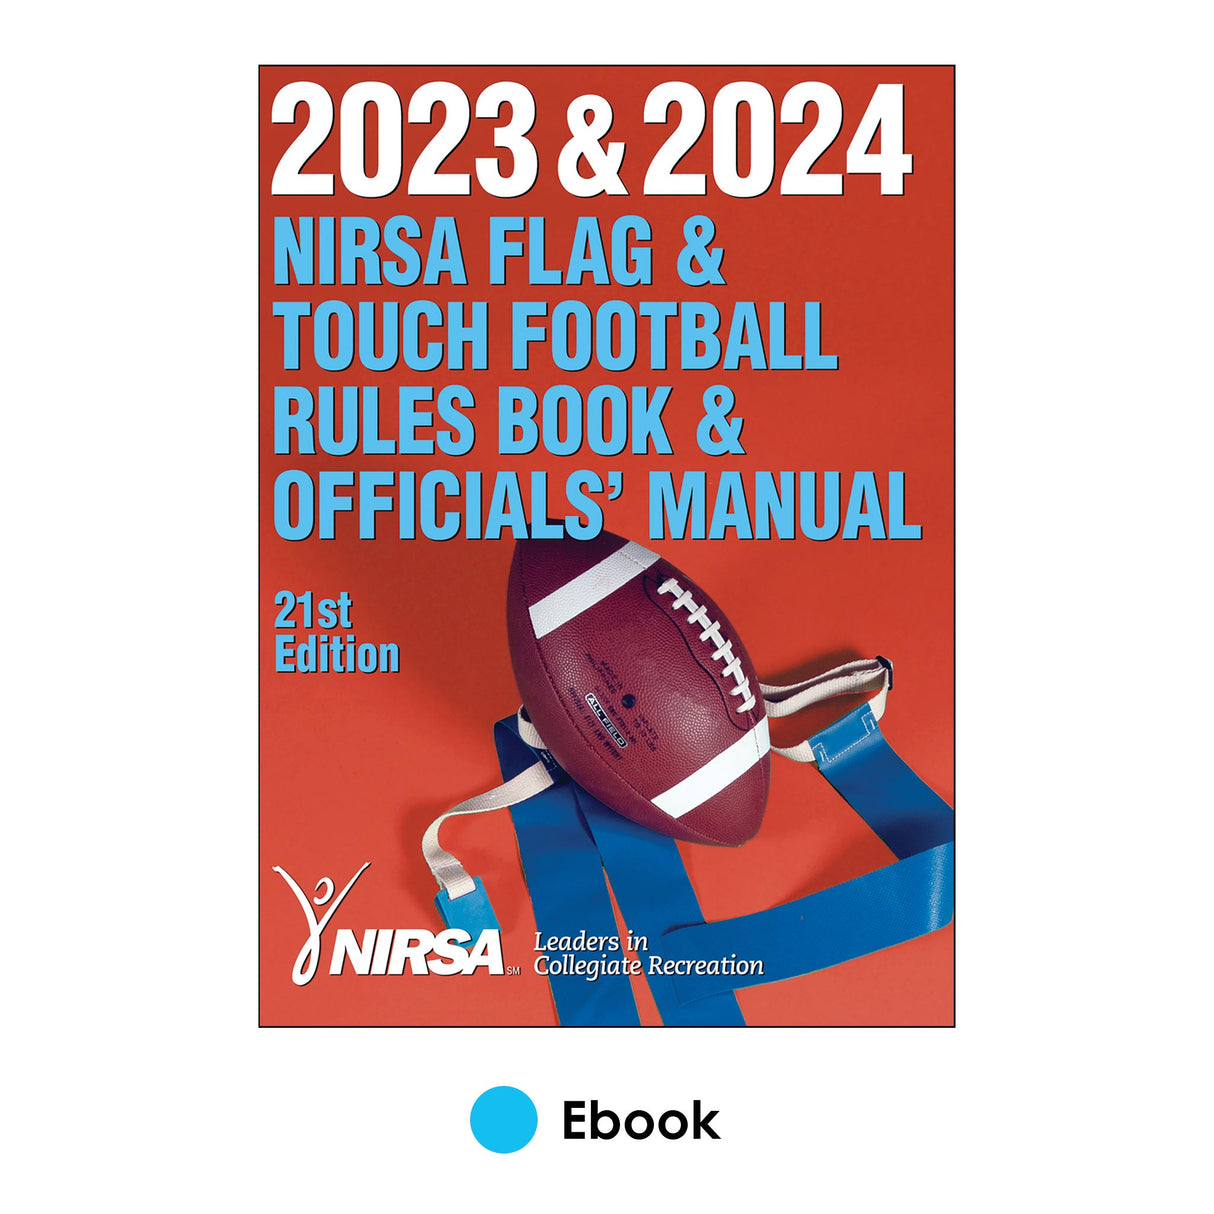 2023 & 2024 NIRSA Flag & Touch Football Rules Book & Officials' Manual 21st Edition epub